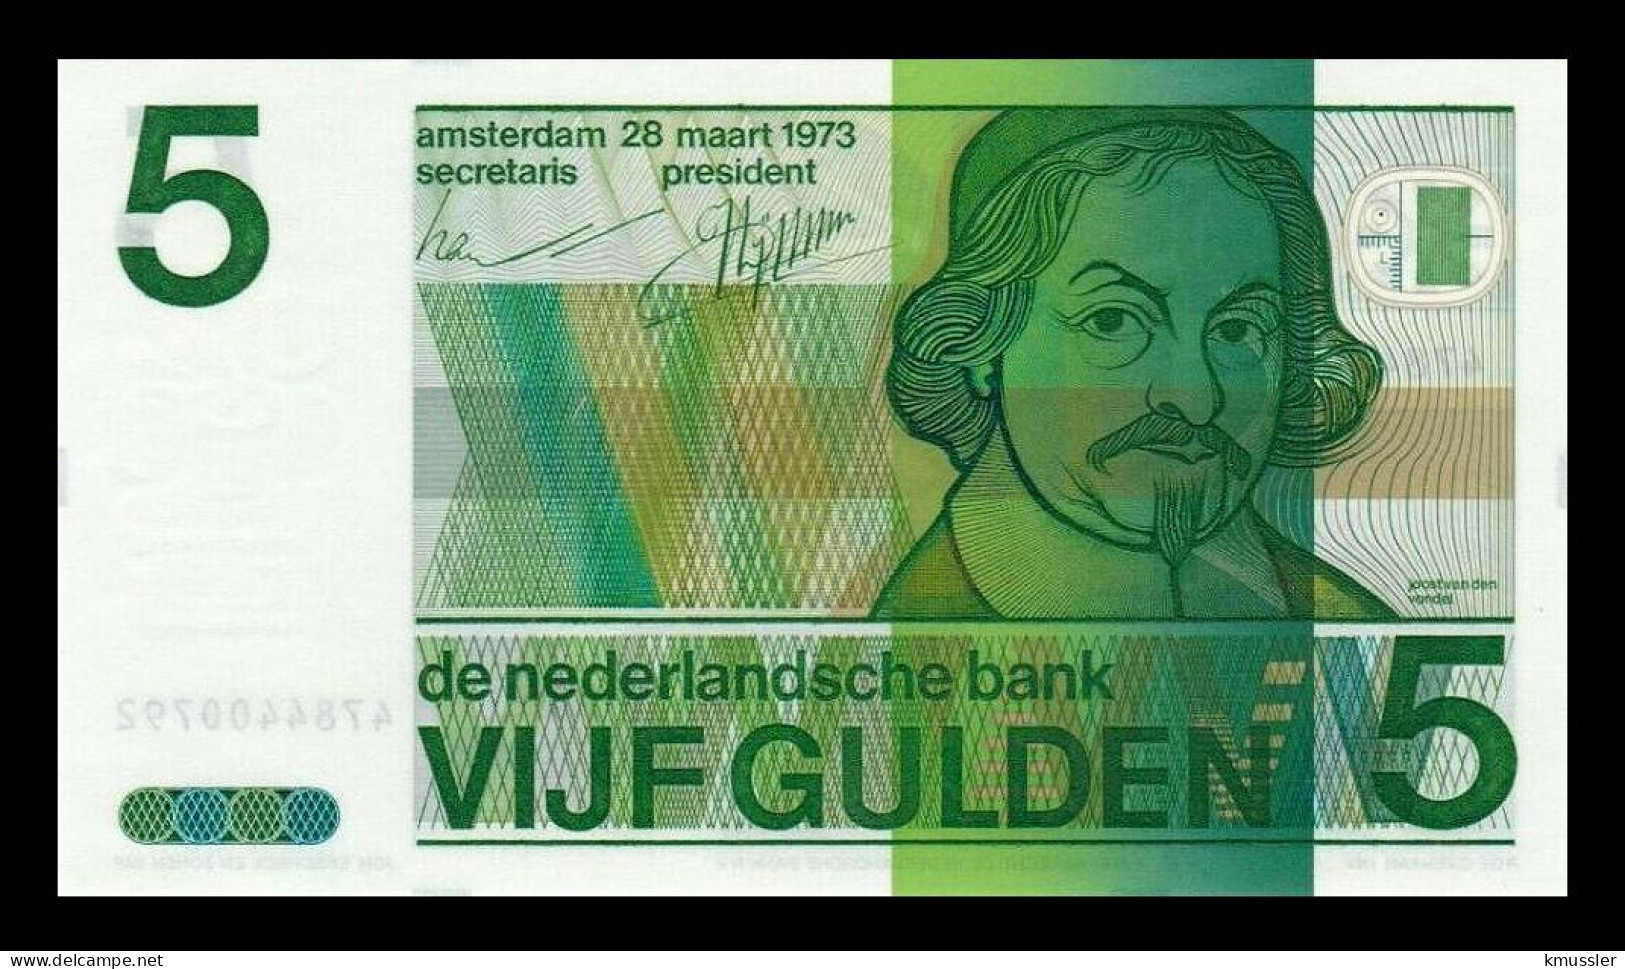 # # # Banknote Niederlande (Netherlands) 5 Gulden UNC # # # - 5 Florín Holandés (gulden)